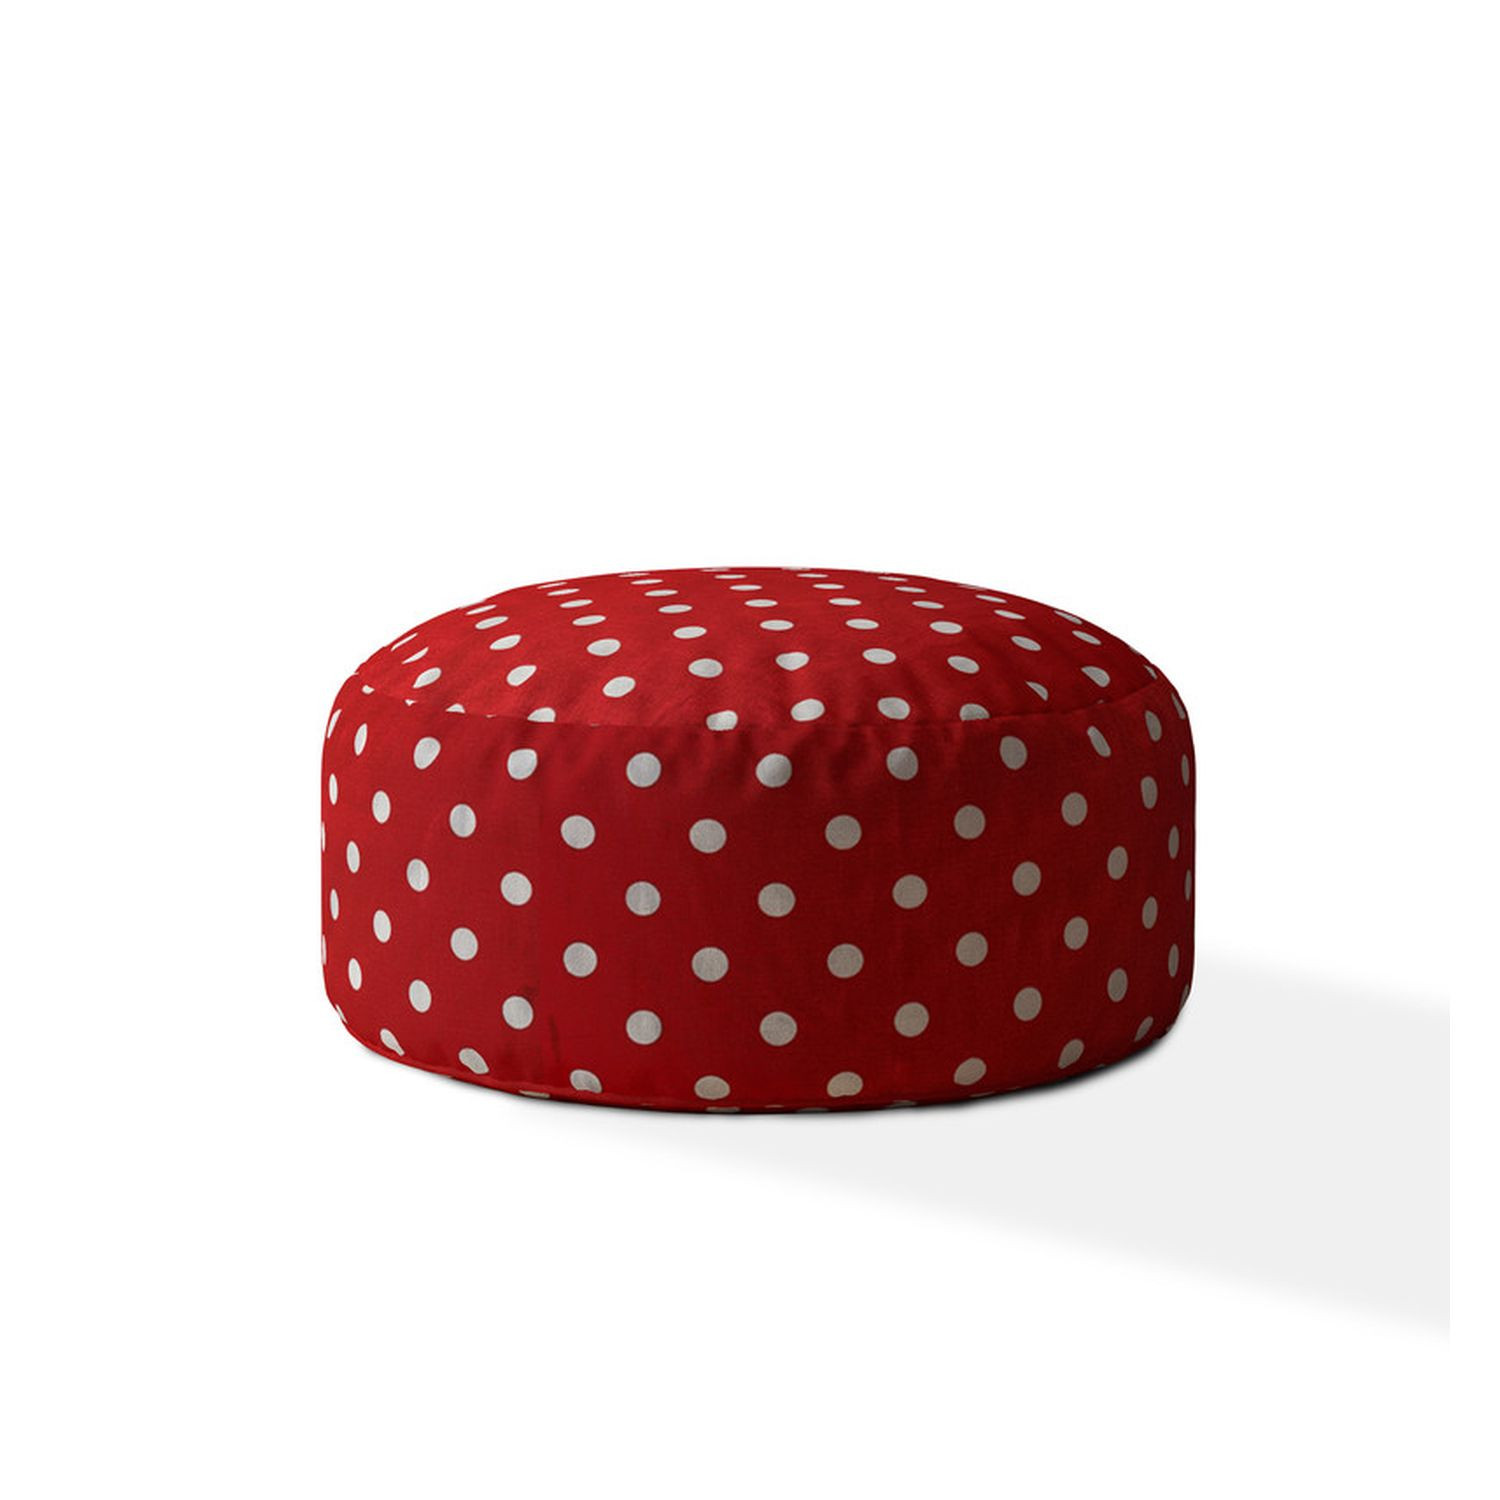 24" Red Cotton Round Polka Dots Pouf Ottoman-518342-1